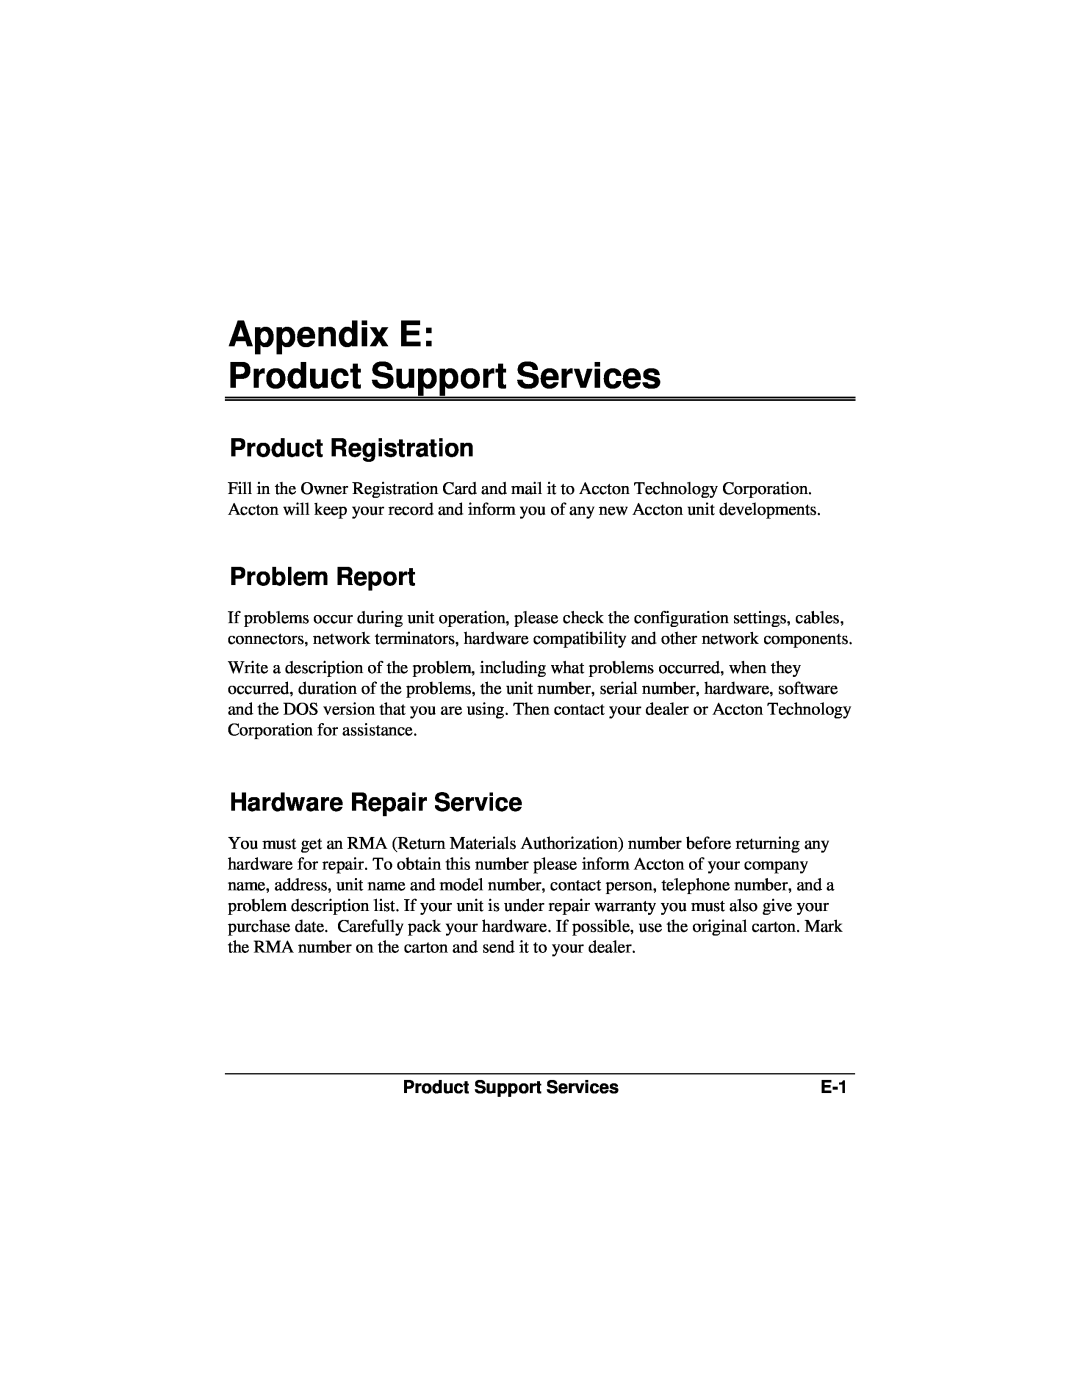 Accton Technology 12se Appendix E Product Support Services, Product Registration, Problem Report, Hardware Repair Service 